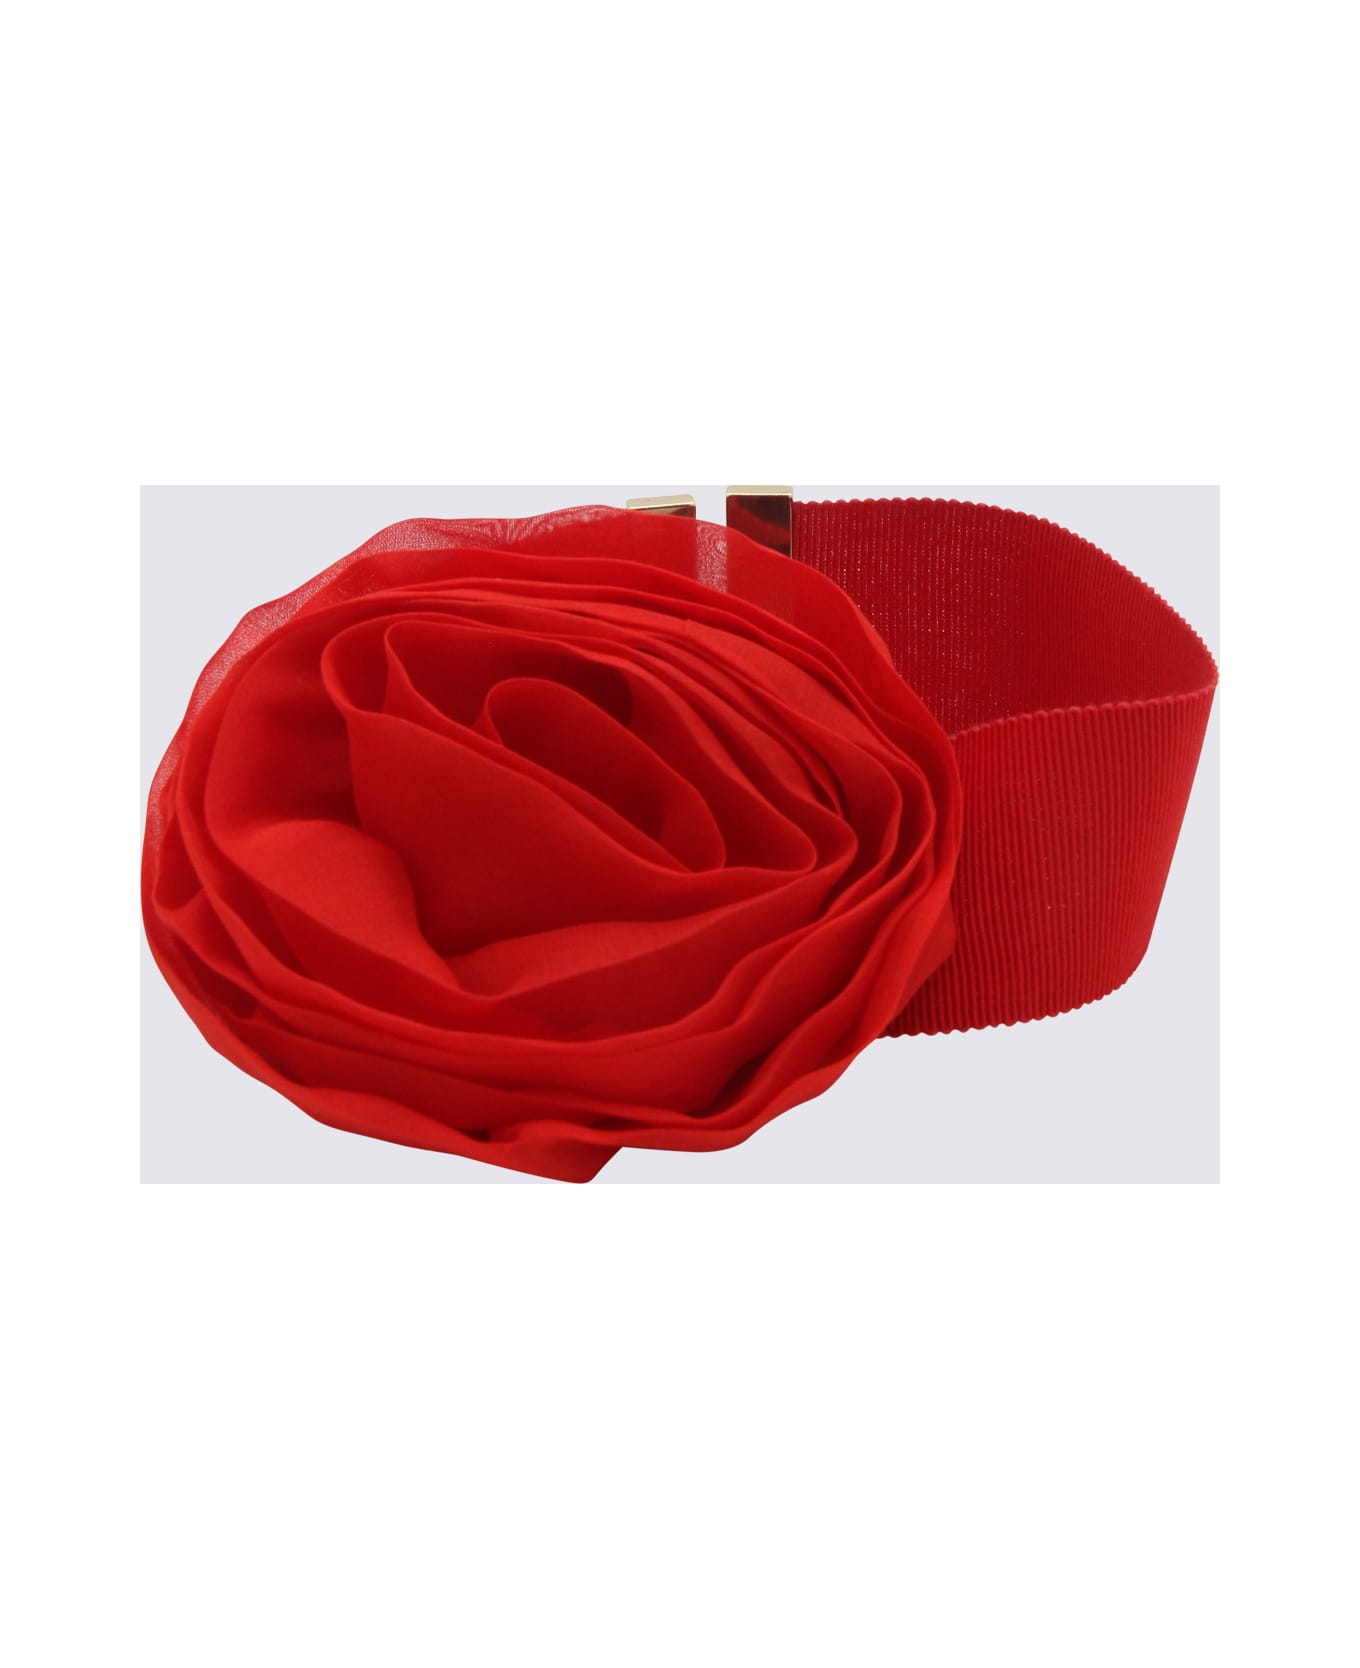 Blumarine Red Silk Croker Necklace - LIPSTICK RED